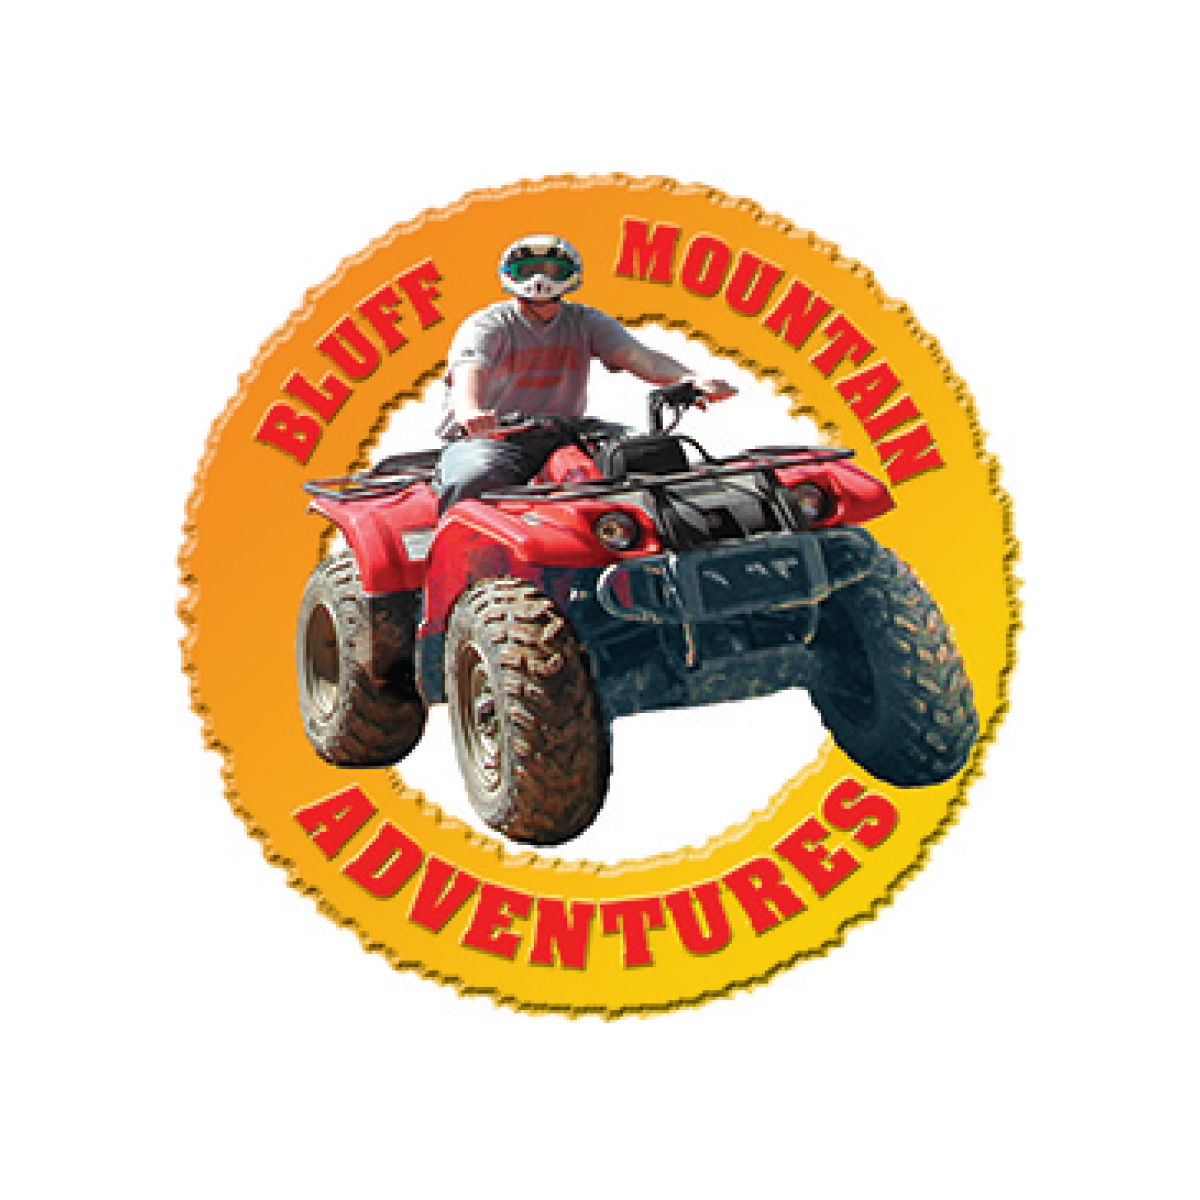 Bluff Mountain Adventures 2019 SMCB Logo.jpg